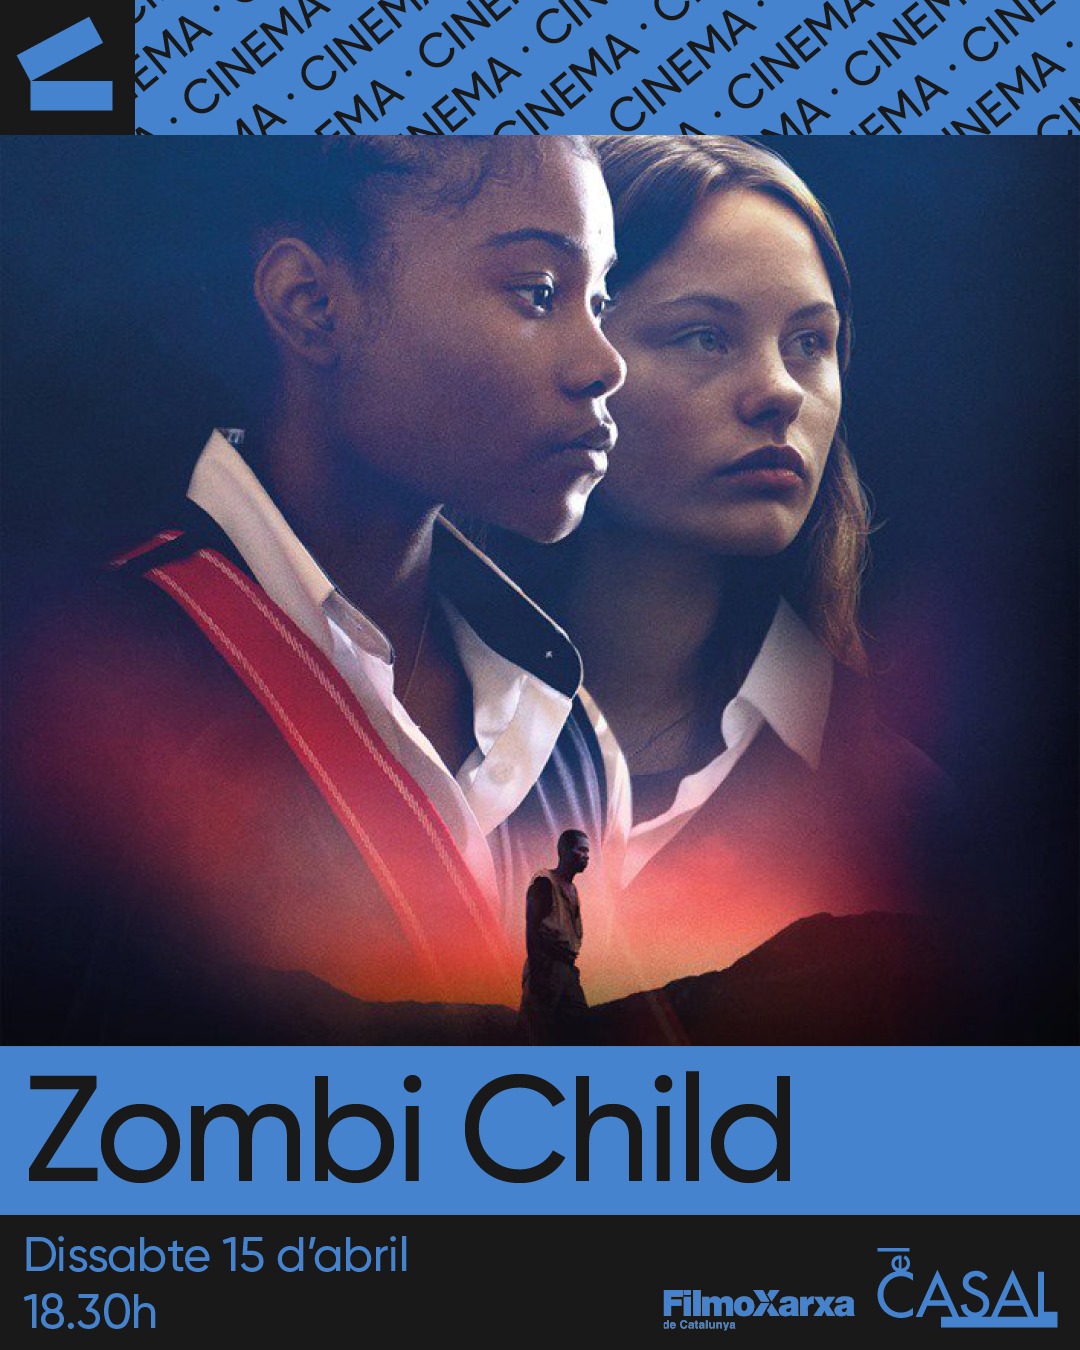 Cartell de la pel·lícula "Zombi Child"